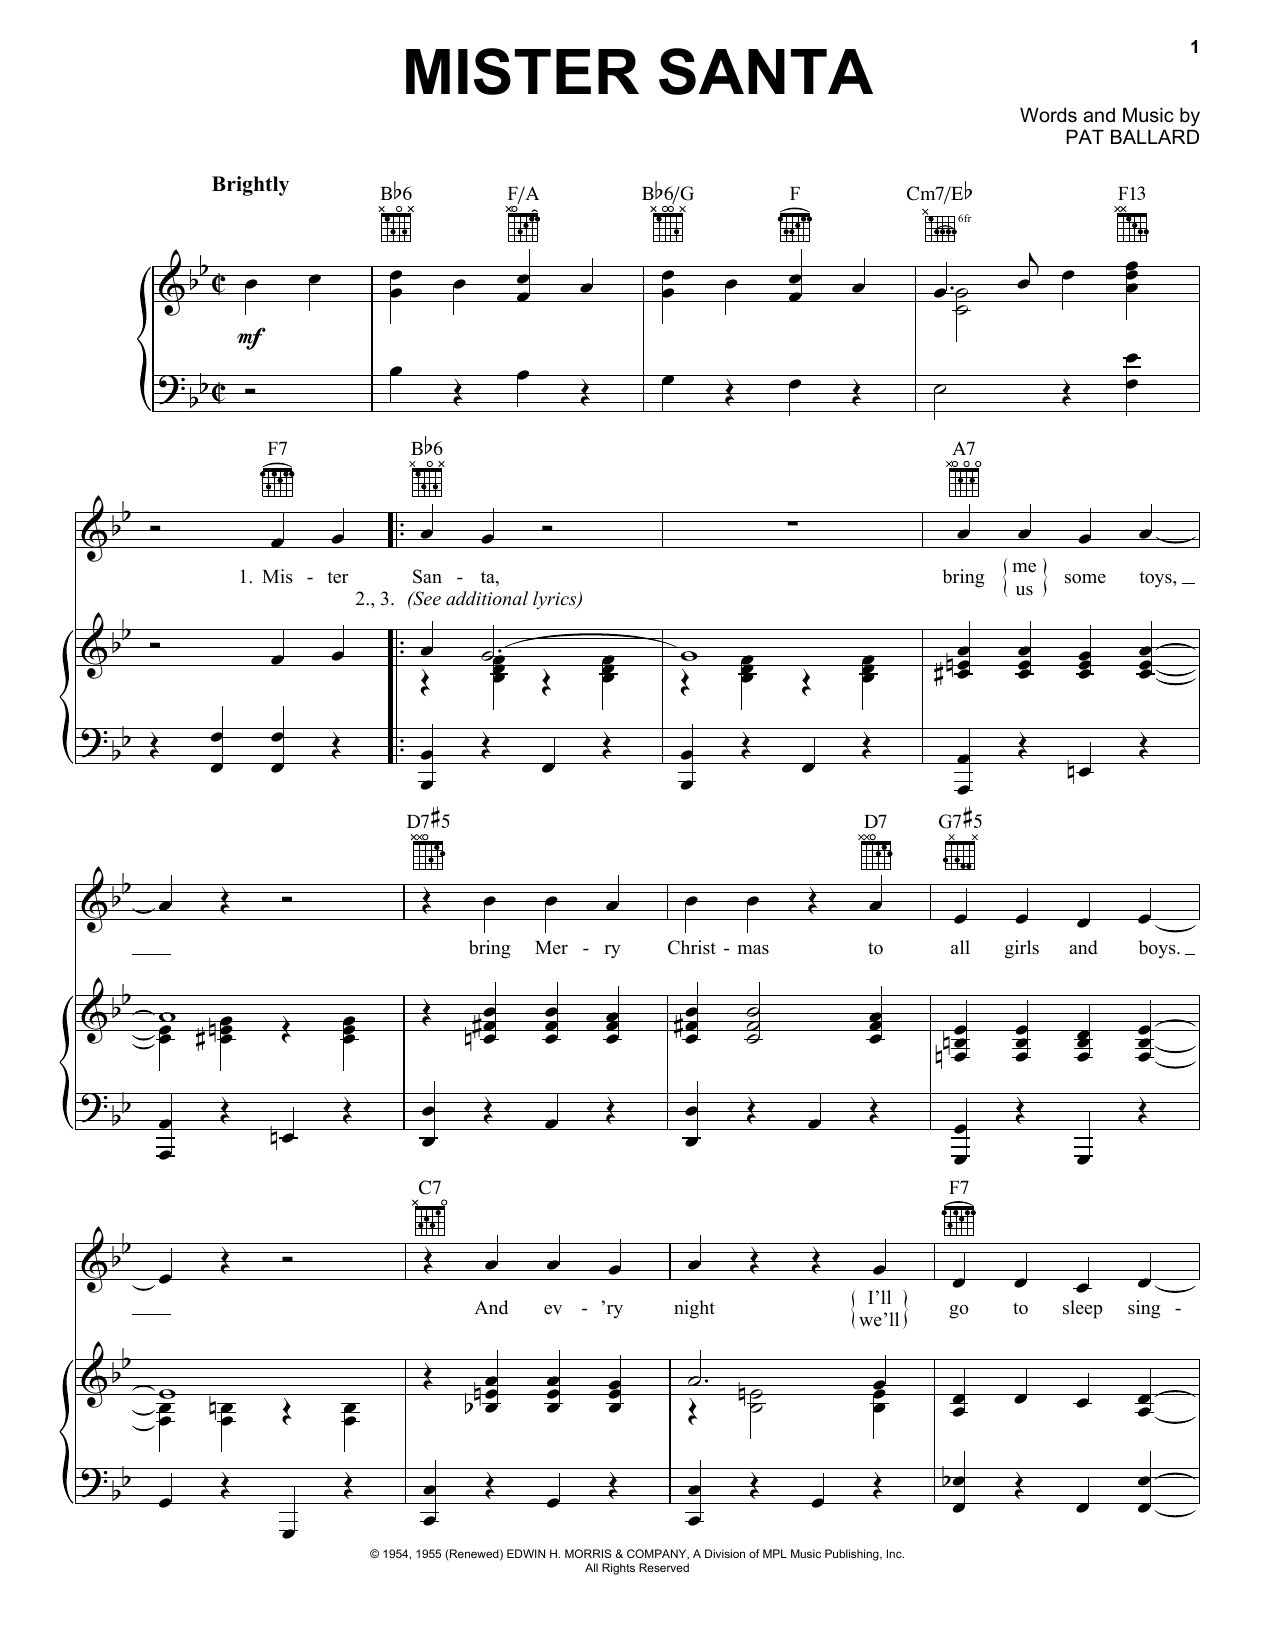 Download Pat Ballard Mister Santa Sheet Music and learn how to play Lyrics & Chords PDF digital score in minutes